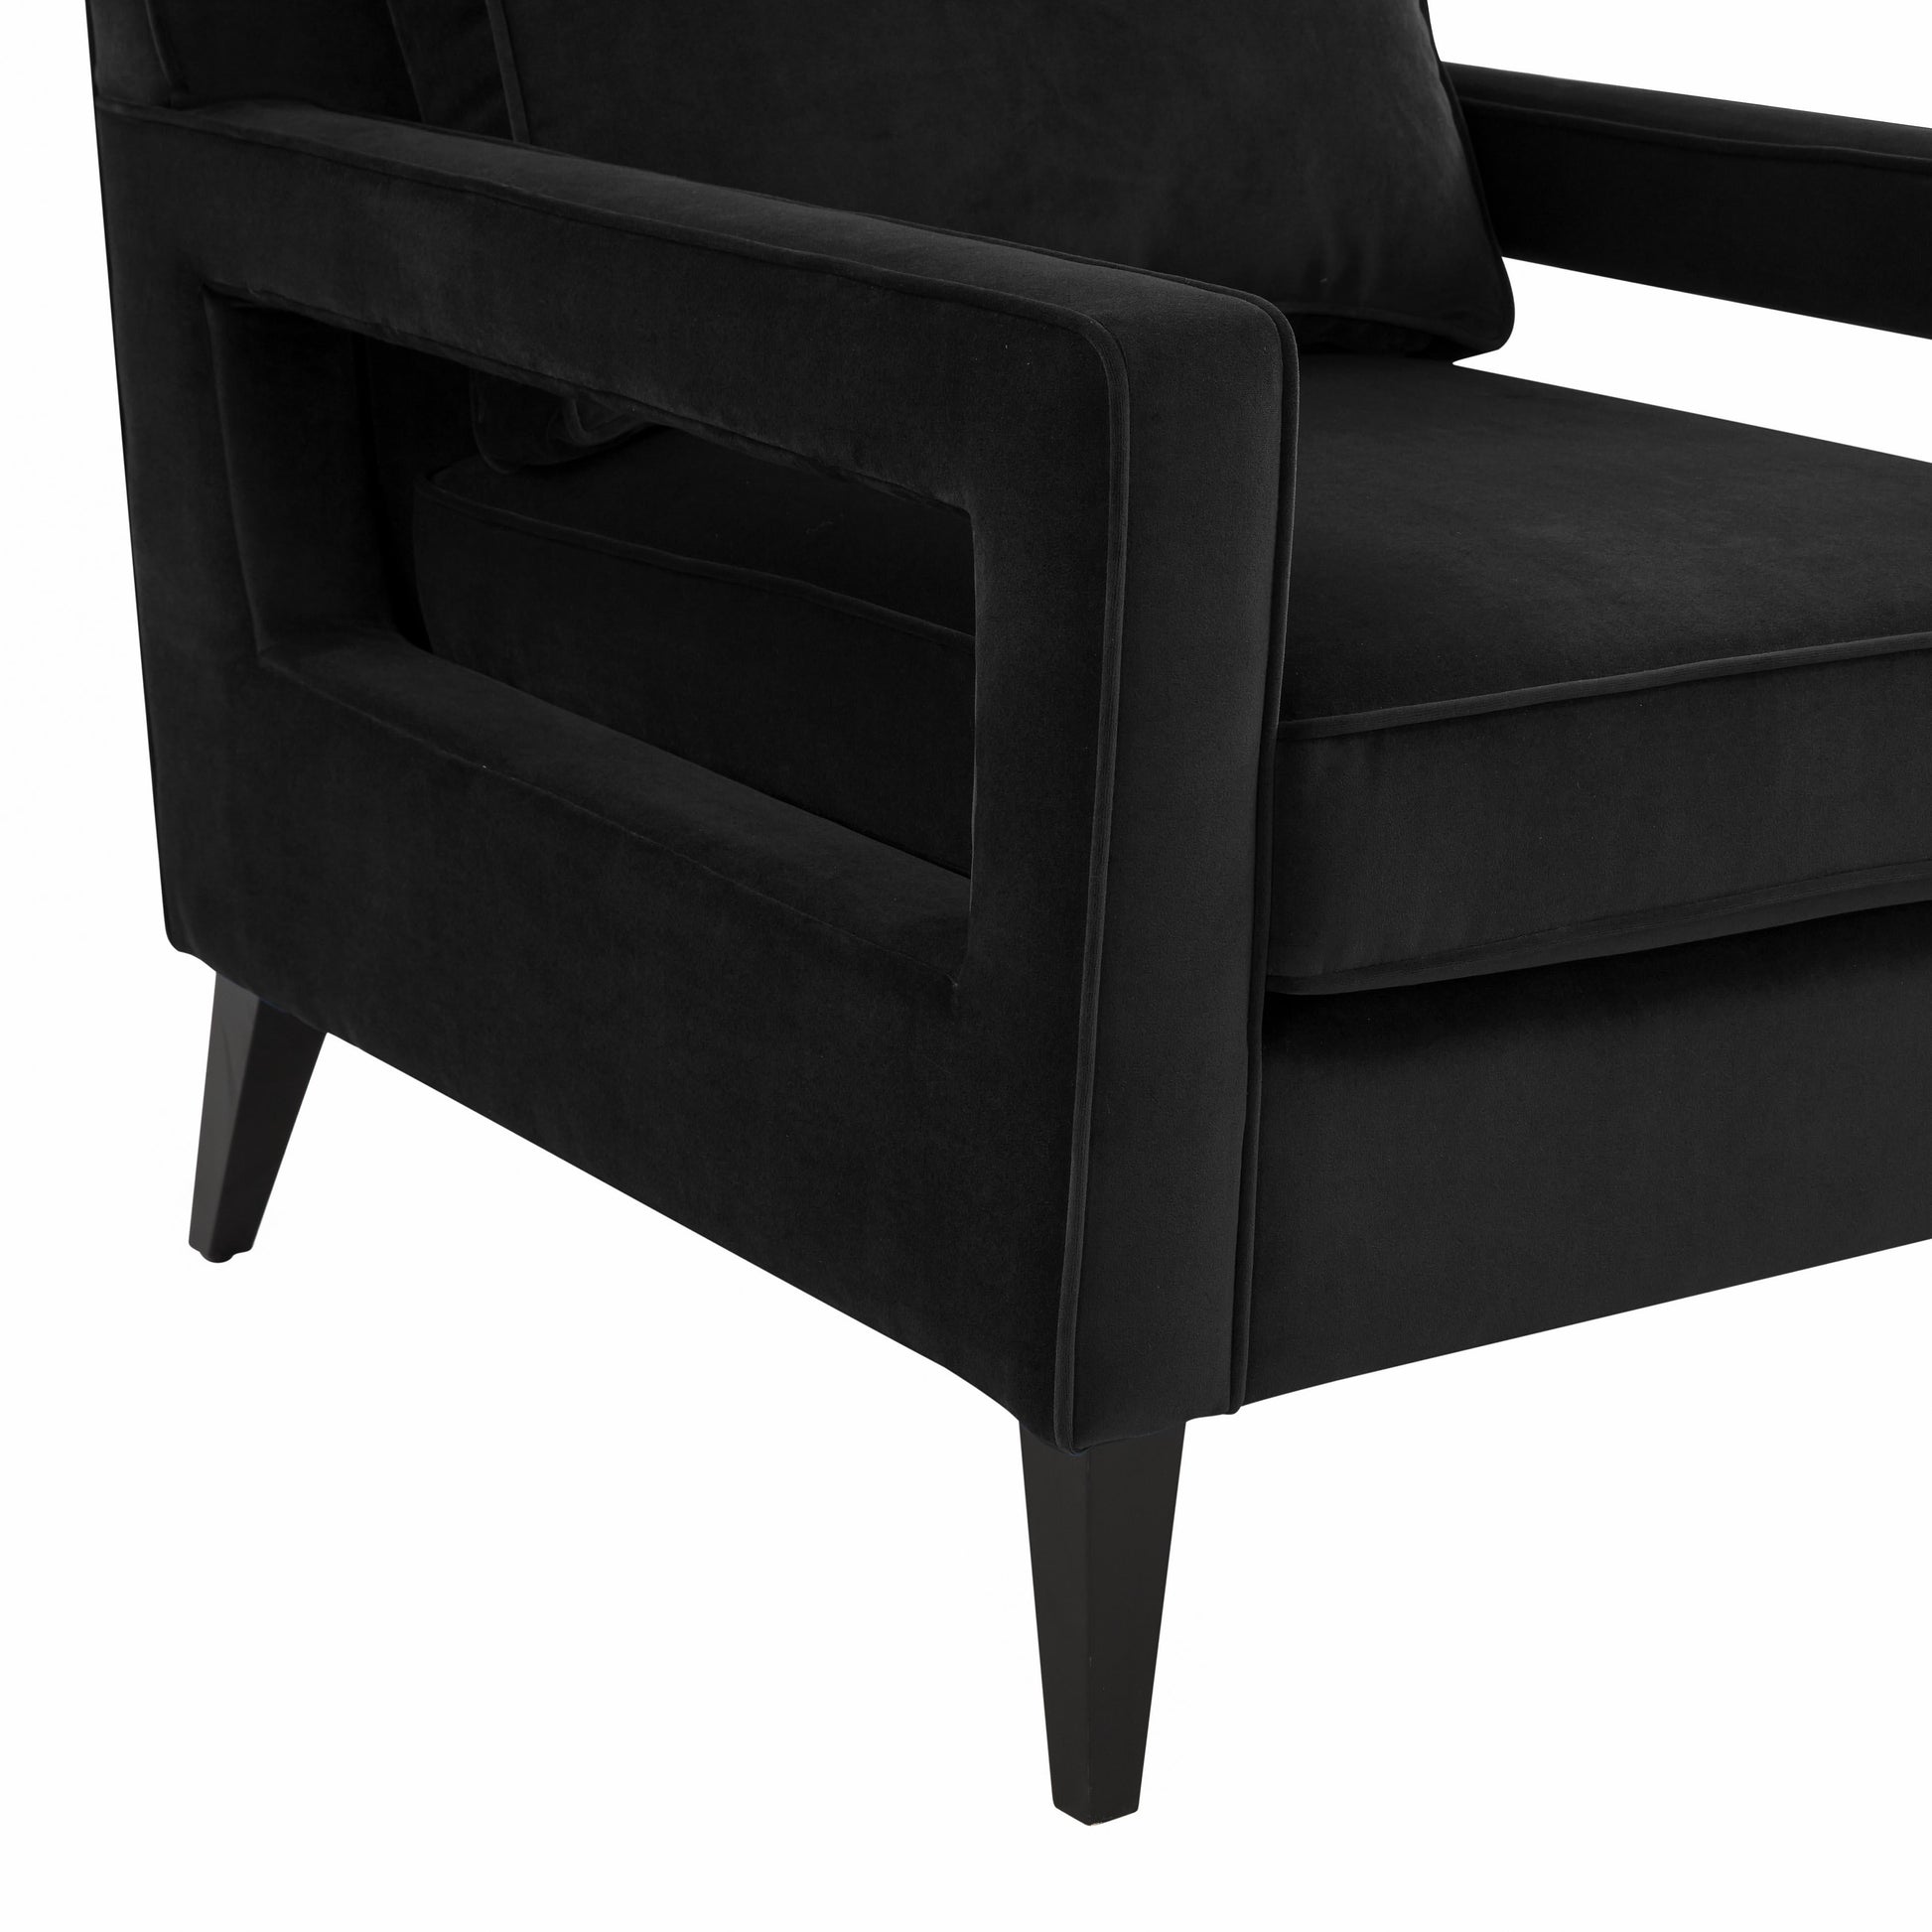 Luna Onyx Black Accent Chair by TOV